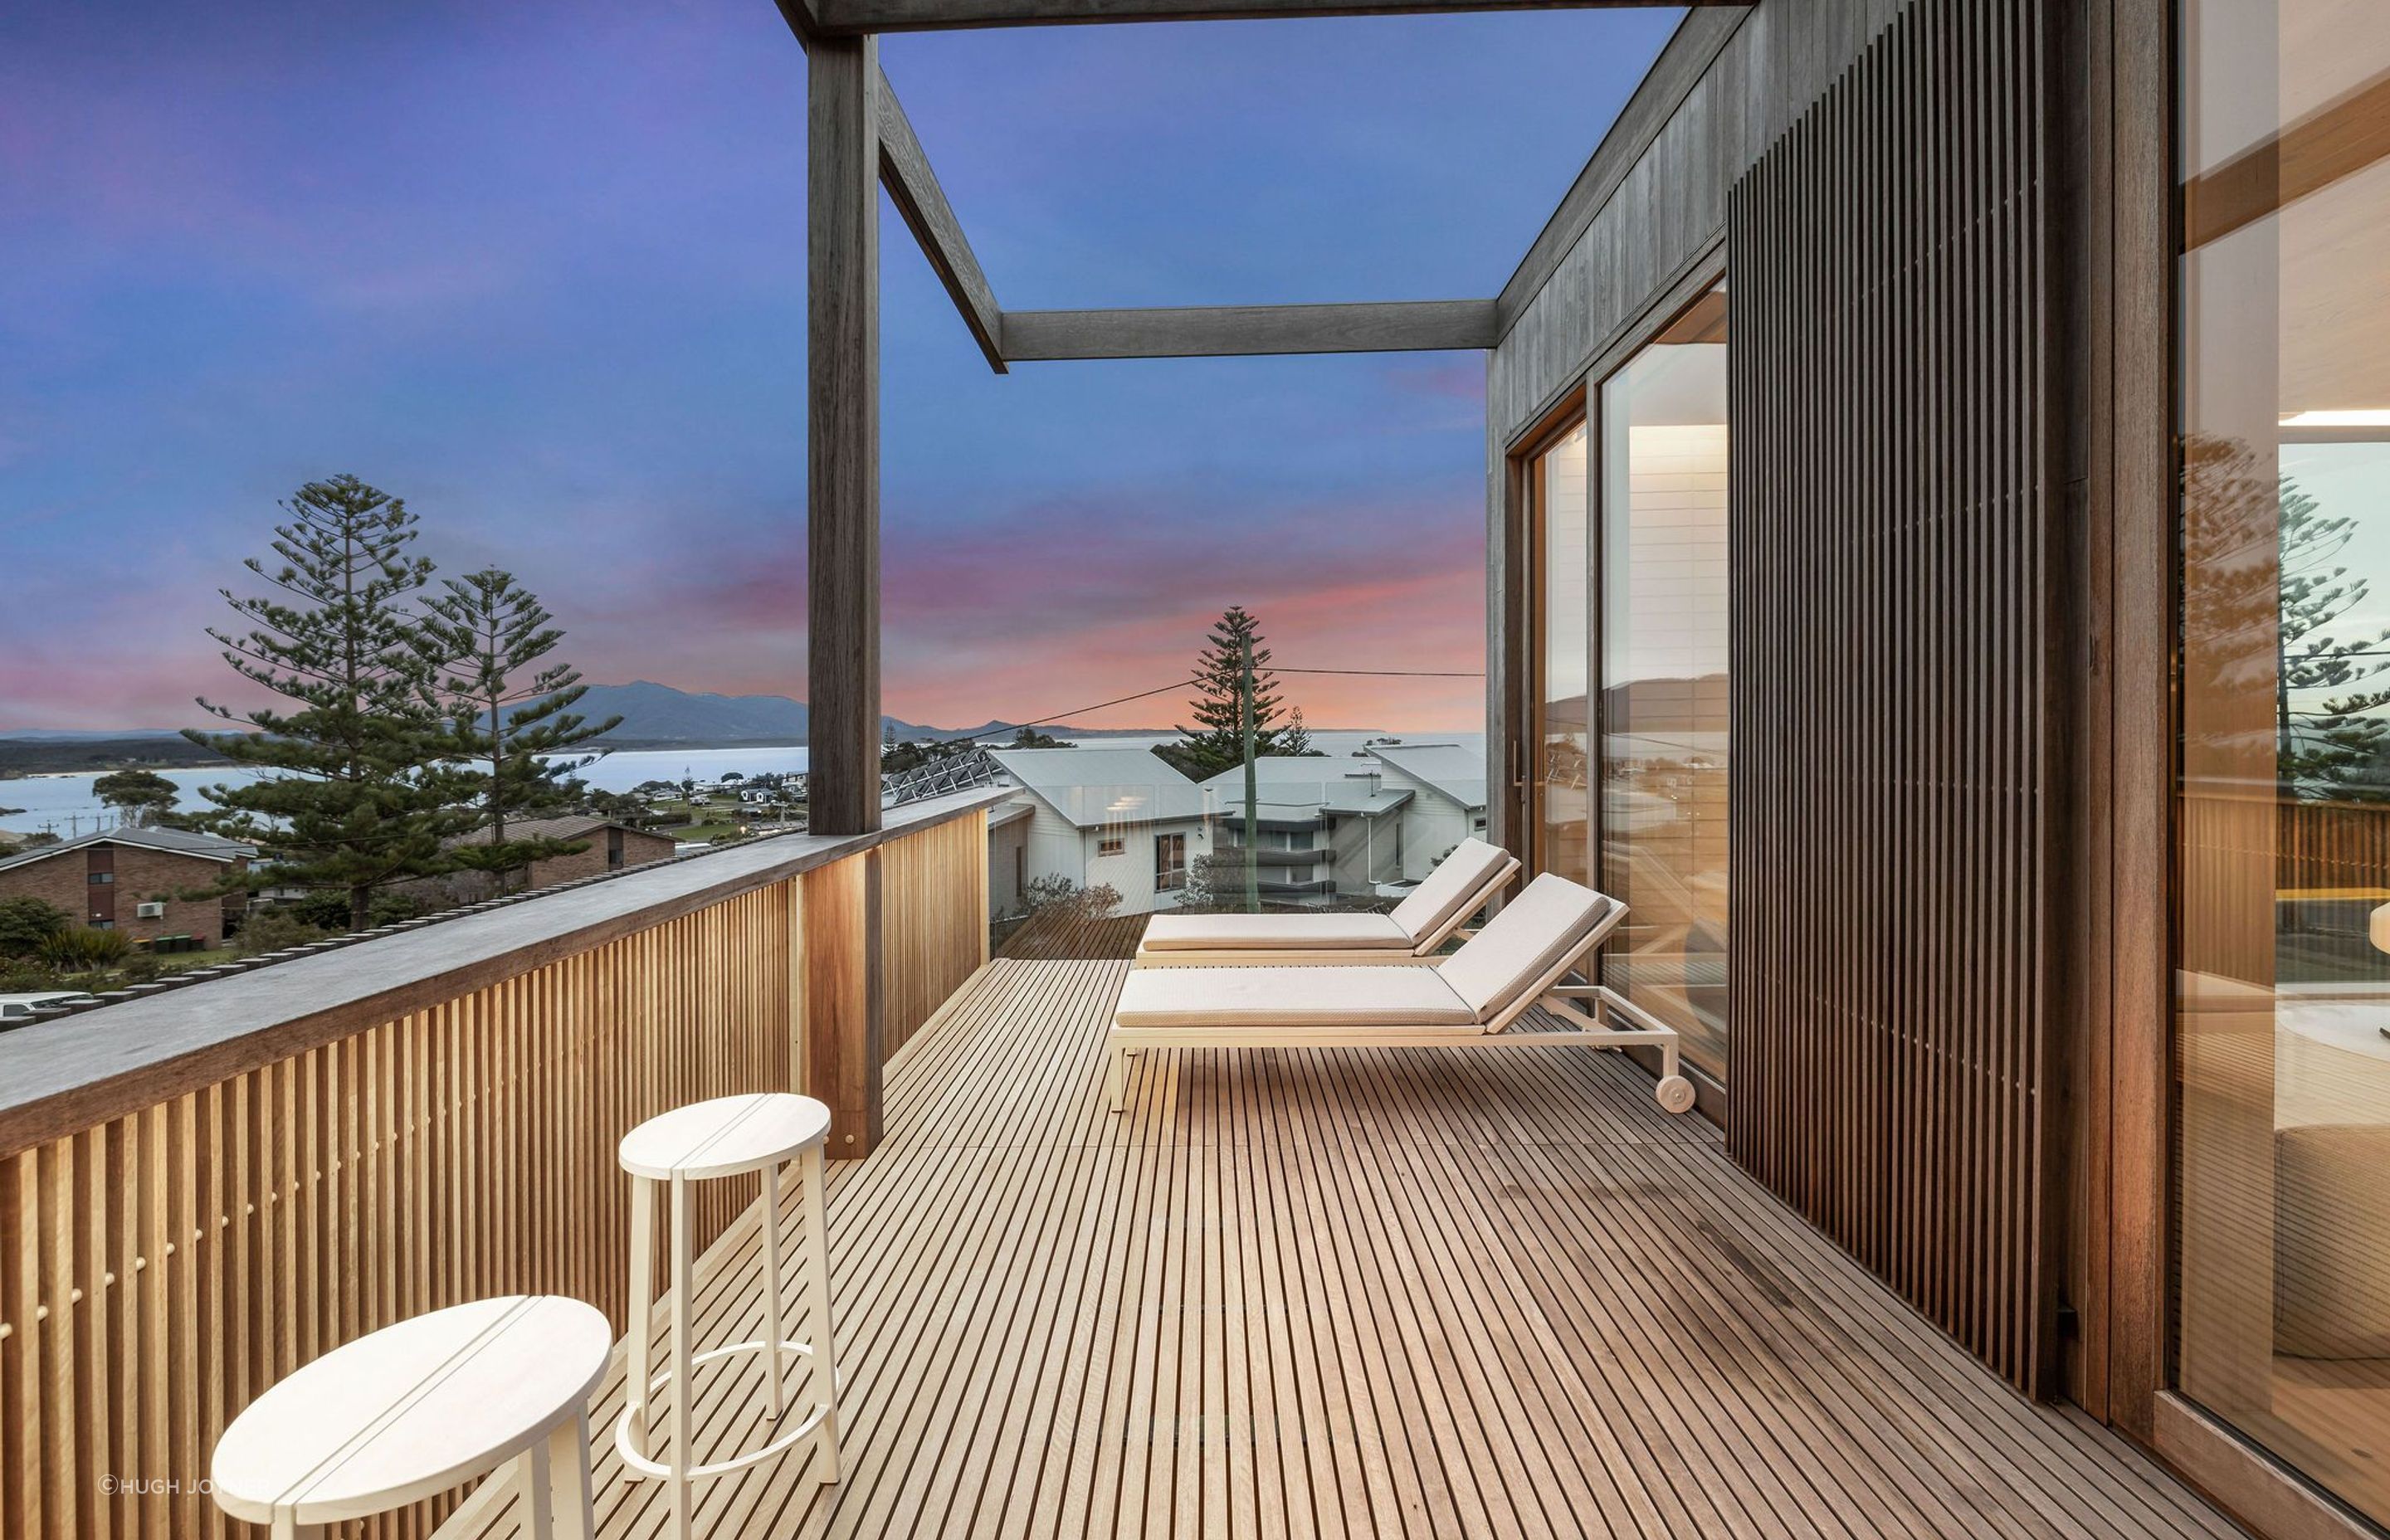 Winter Architecture reimagines the Australian beach shack, trading rustic seaside charm for modernist elegance.